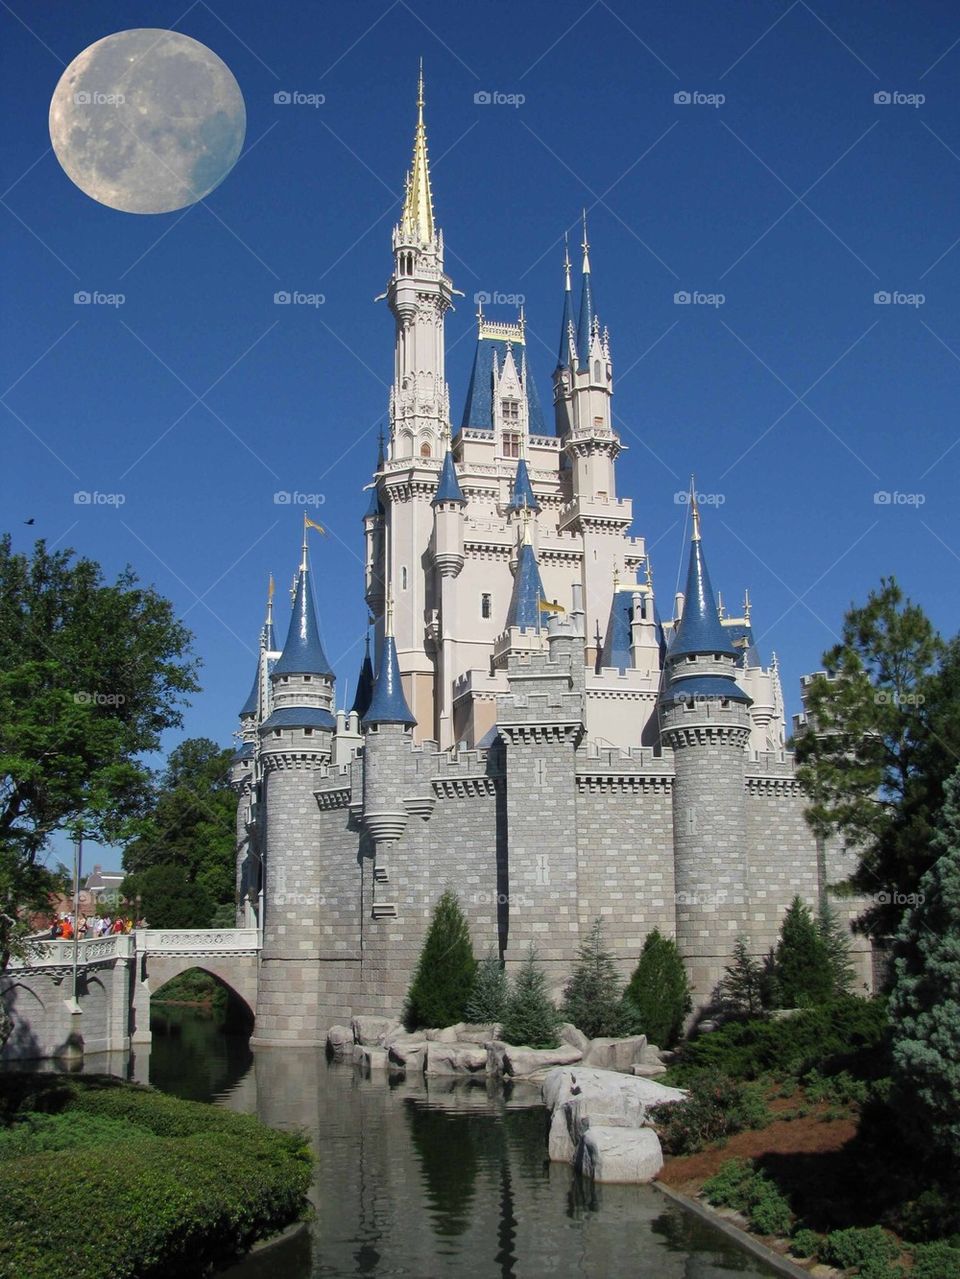 Moon over Disney